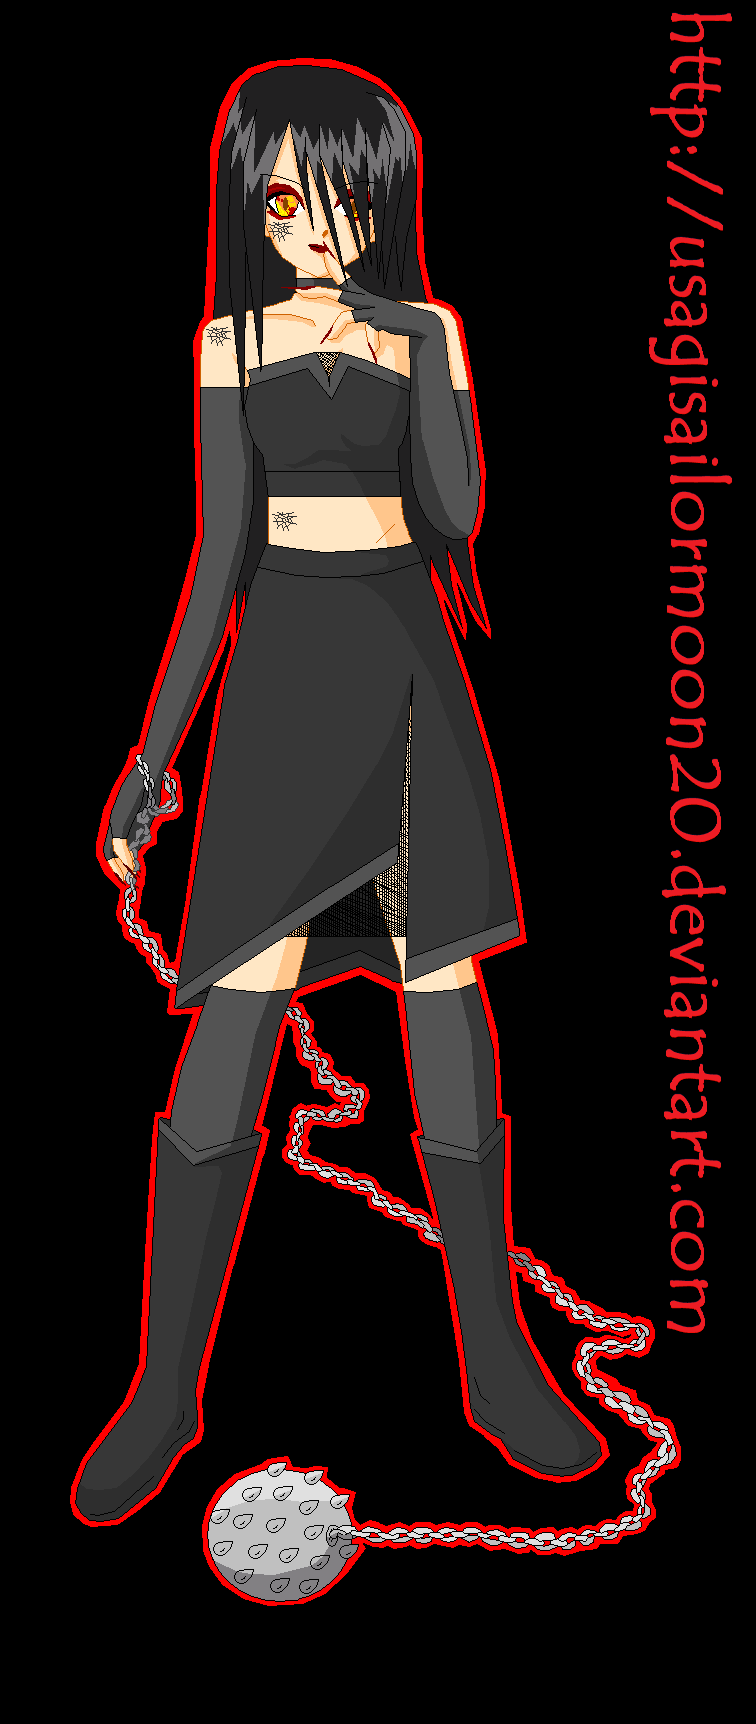 The Demonic Vampire Girl Amy by UsagiSM20Papercuts